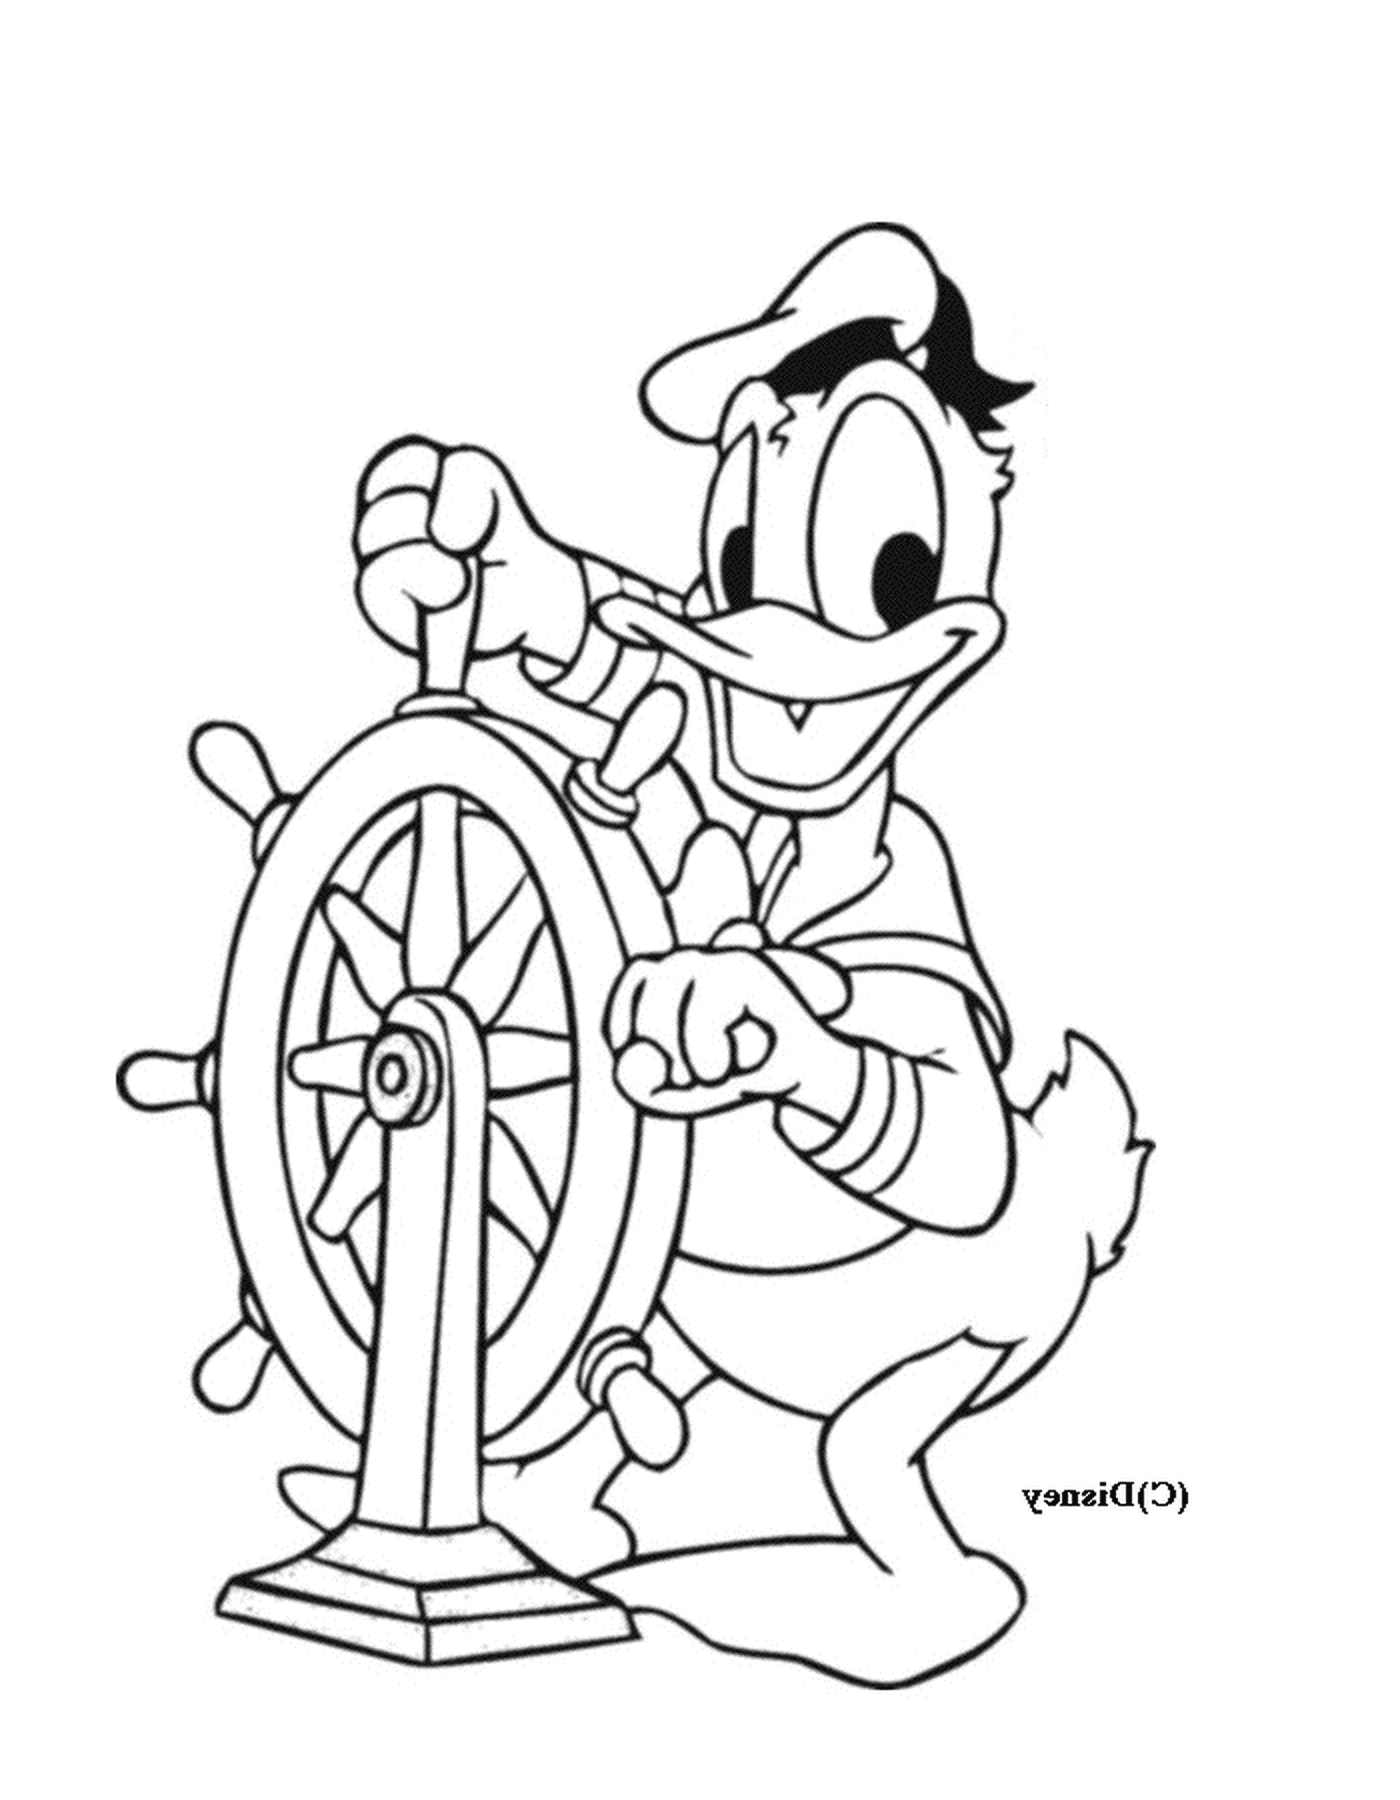  Donald sails confidently 